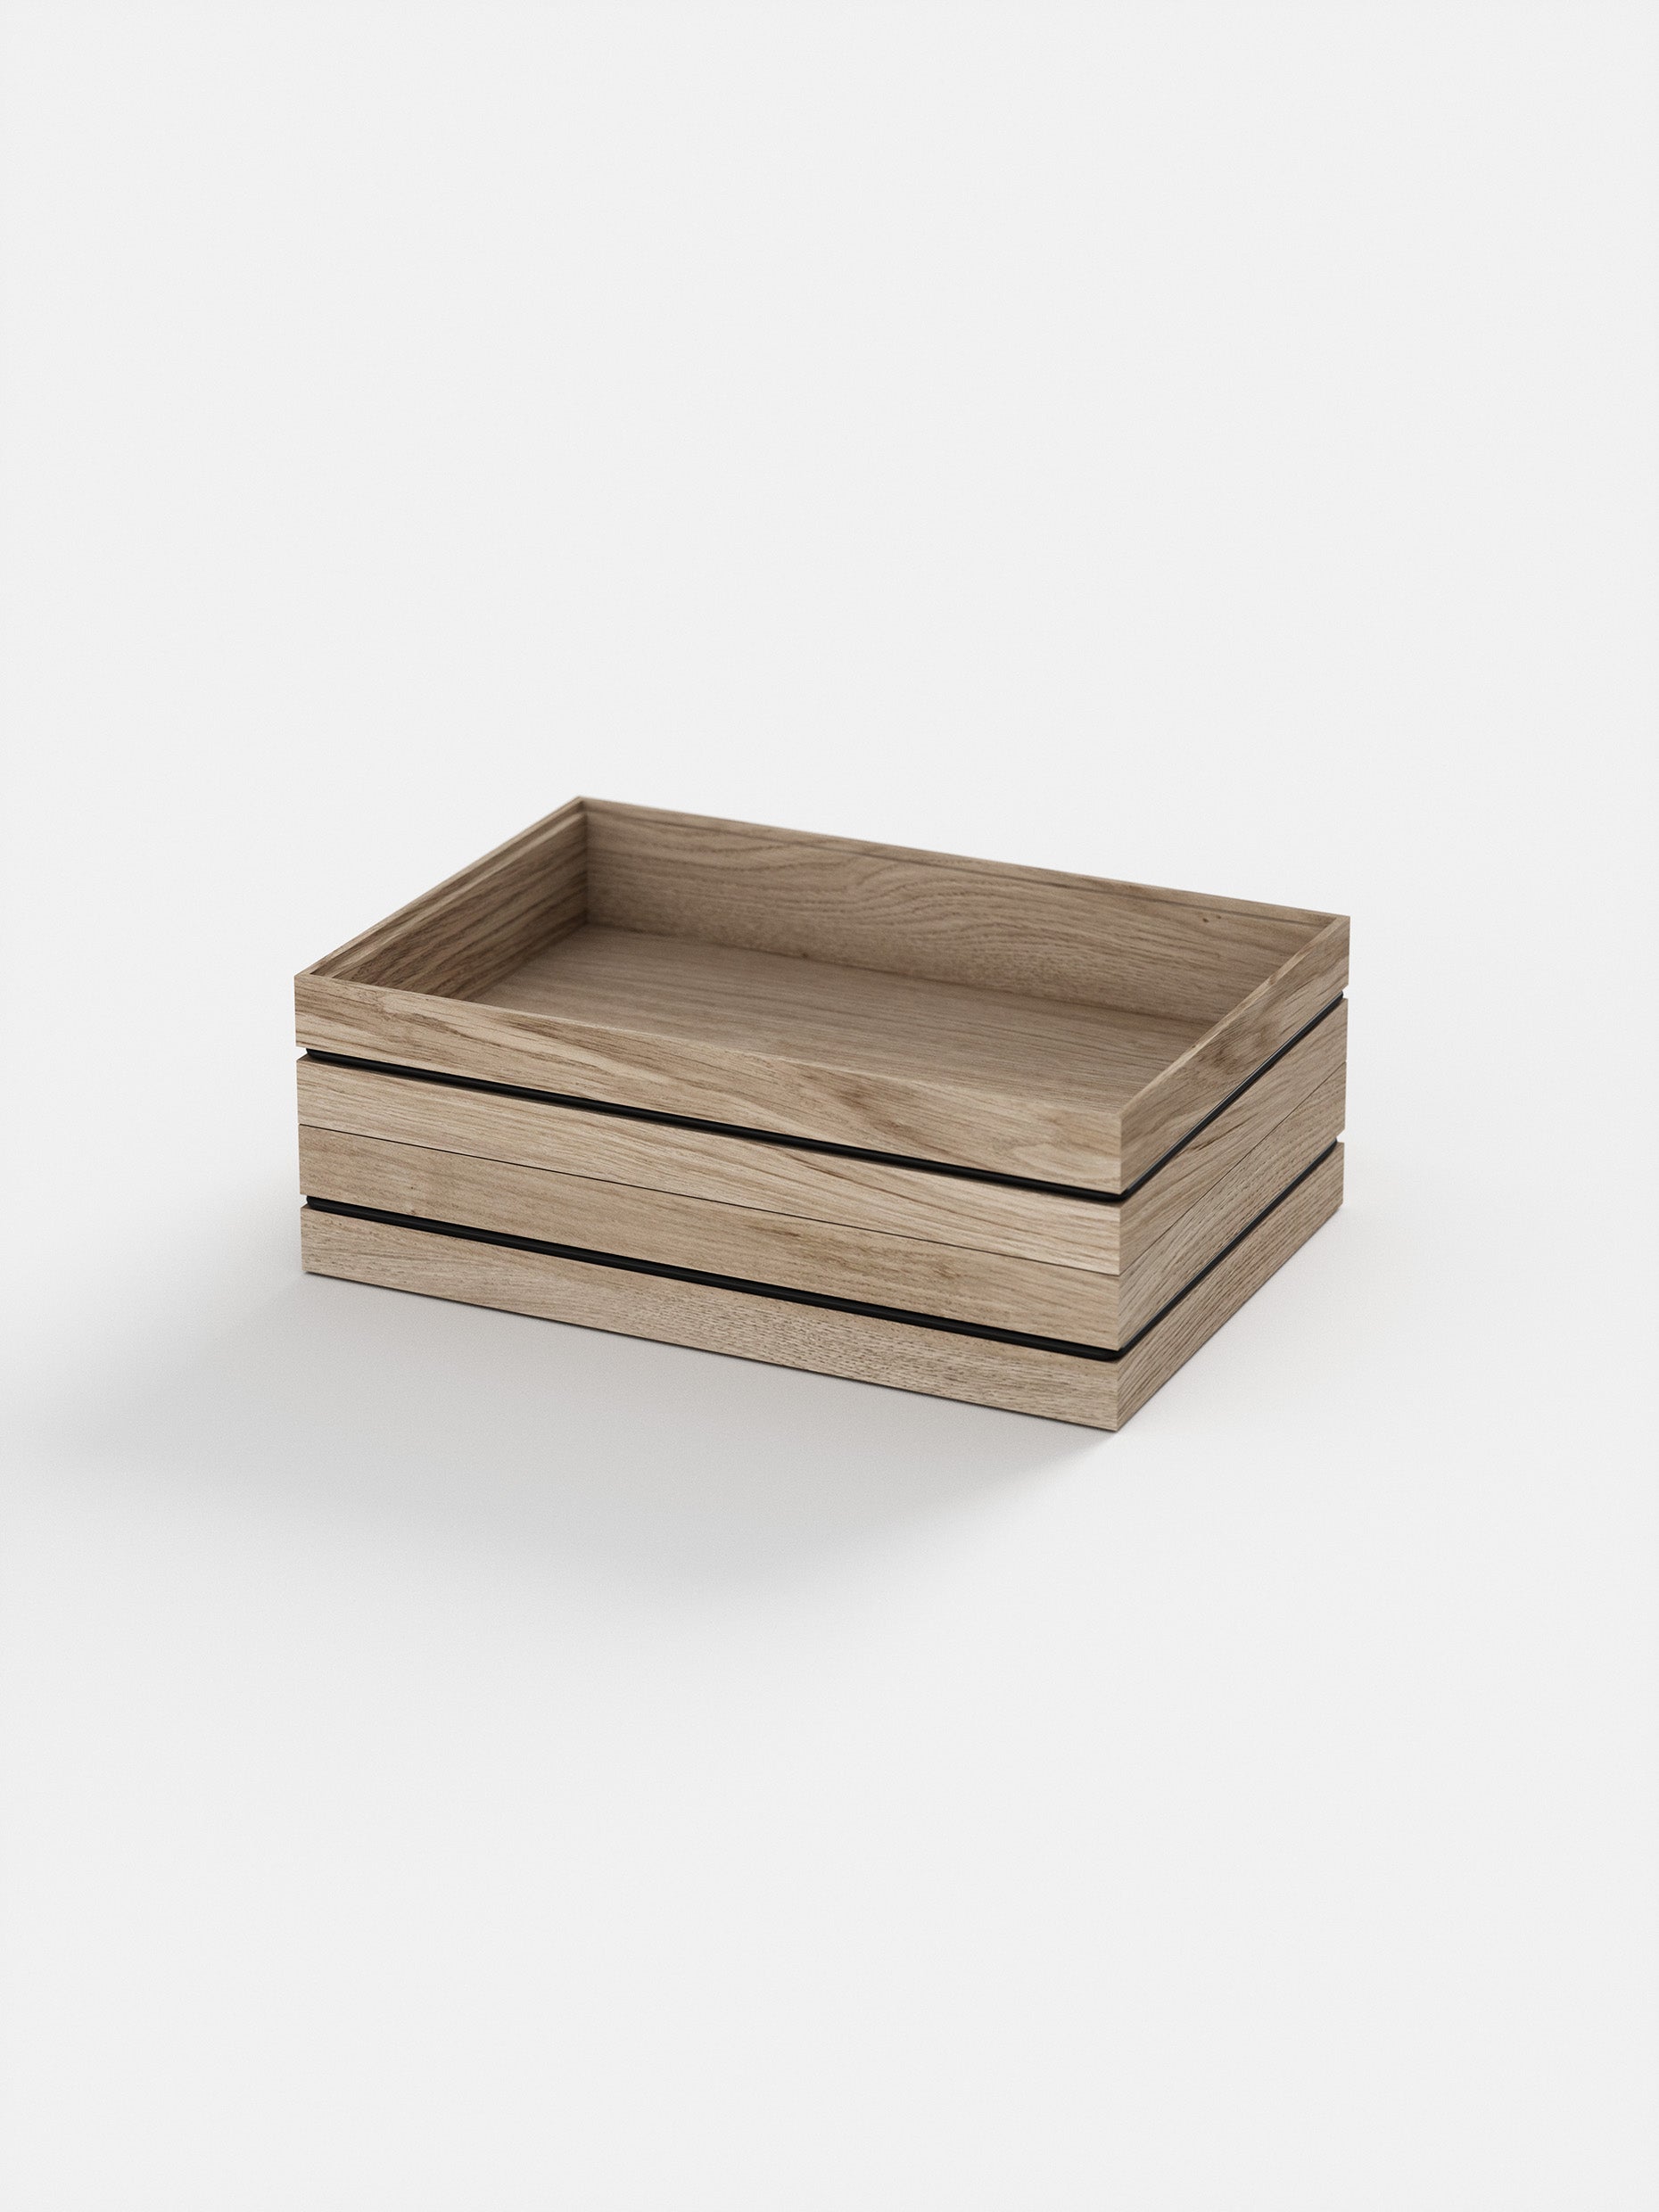 Functional and Sleek Wooden Tray | Organise | Large | by Moebe - Lifestory - Moebe